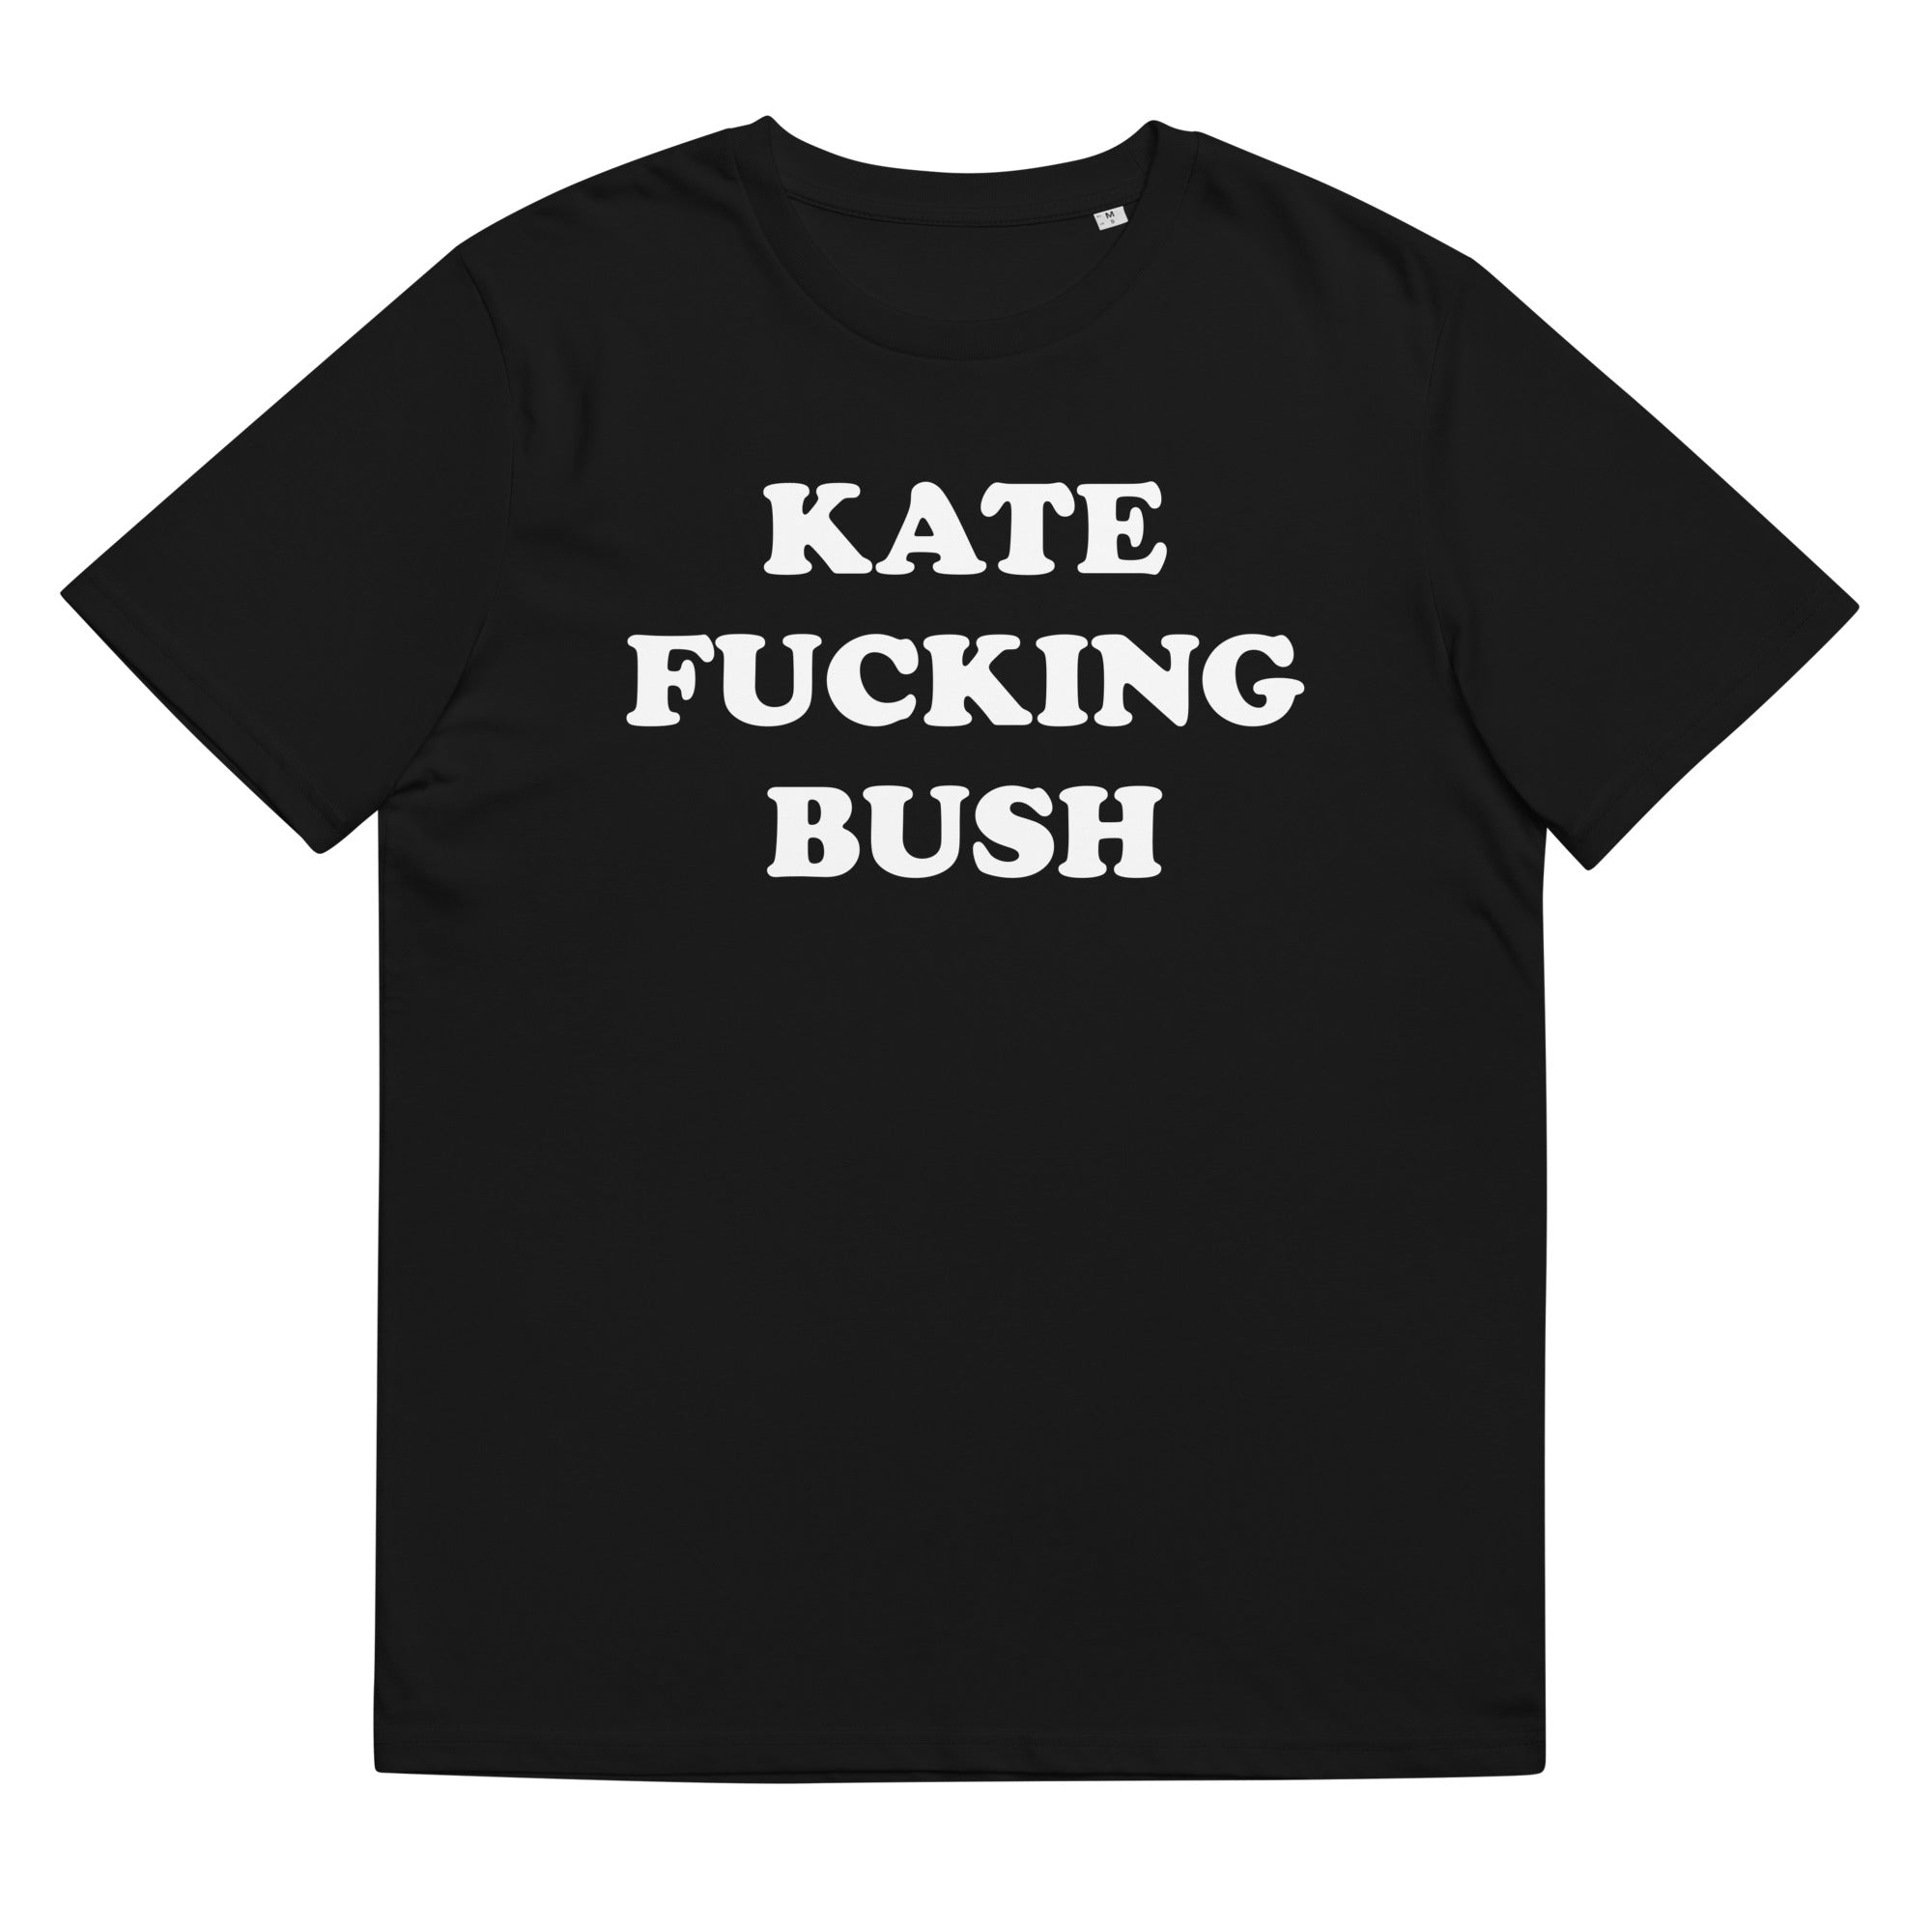 KATE F*CKING BUSH Camiseta unisex estampada de algodón orgánico - texto blanco